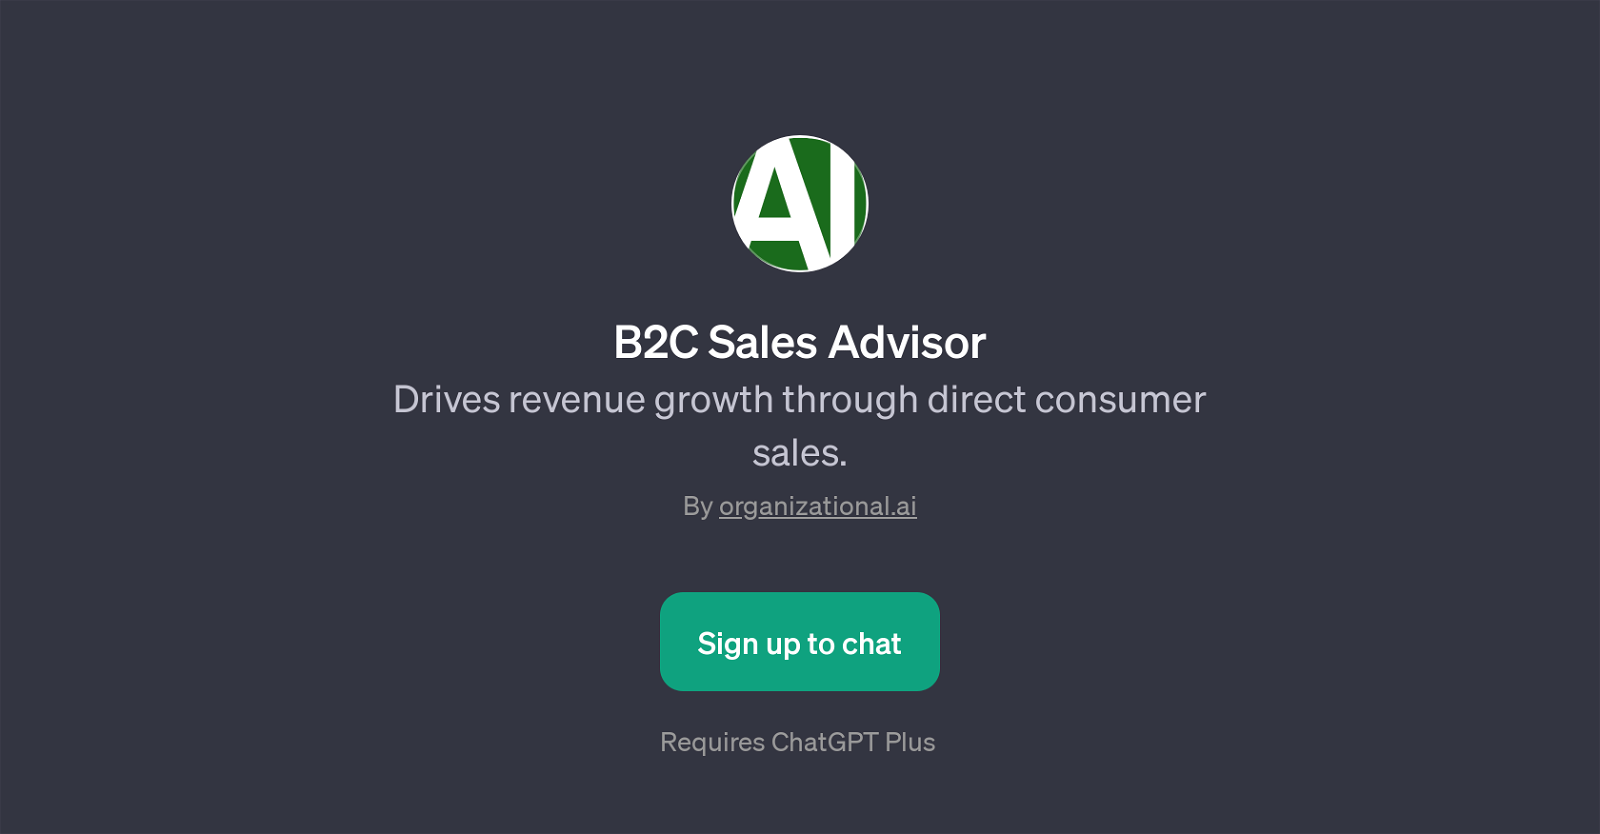 B2C Sales Advisor website